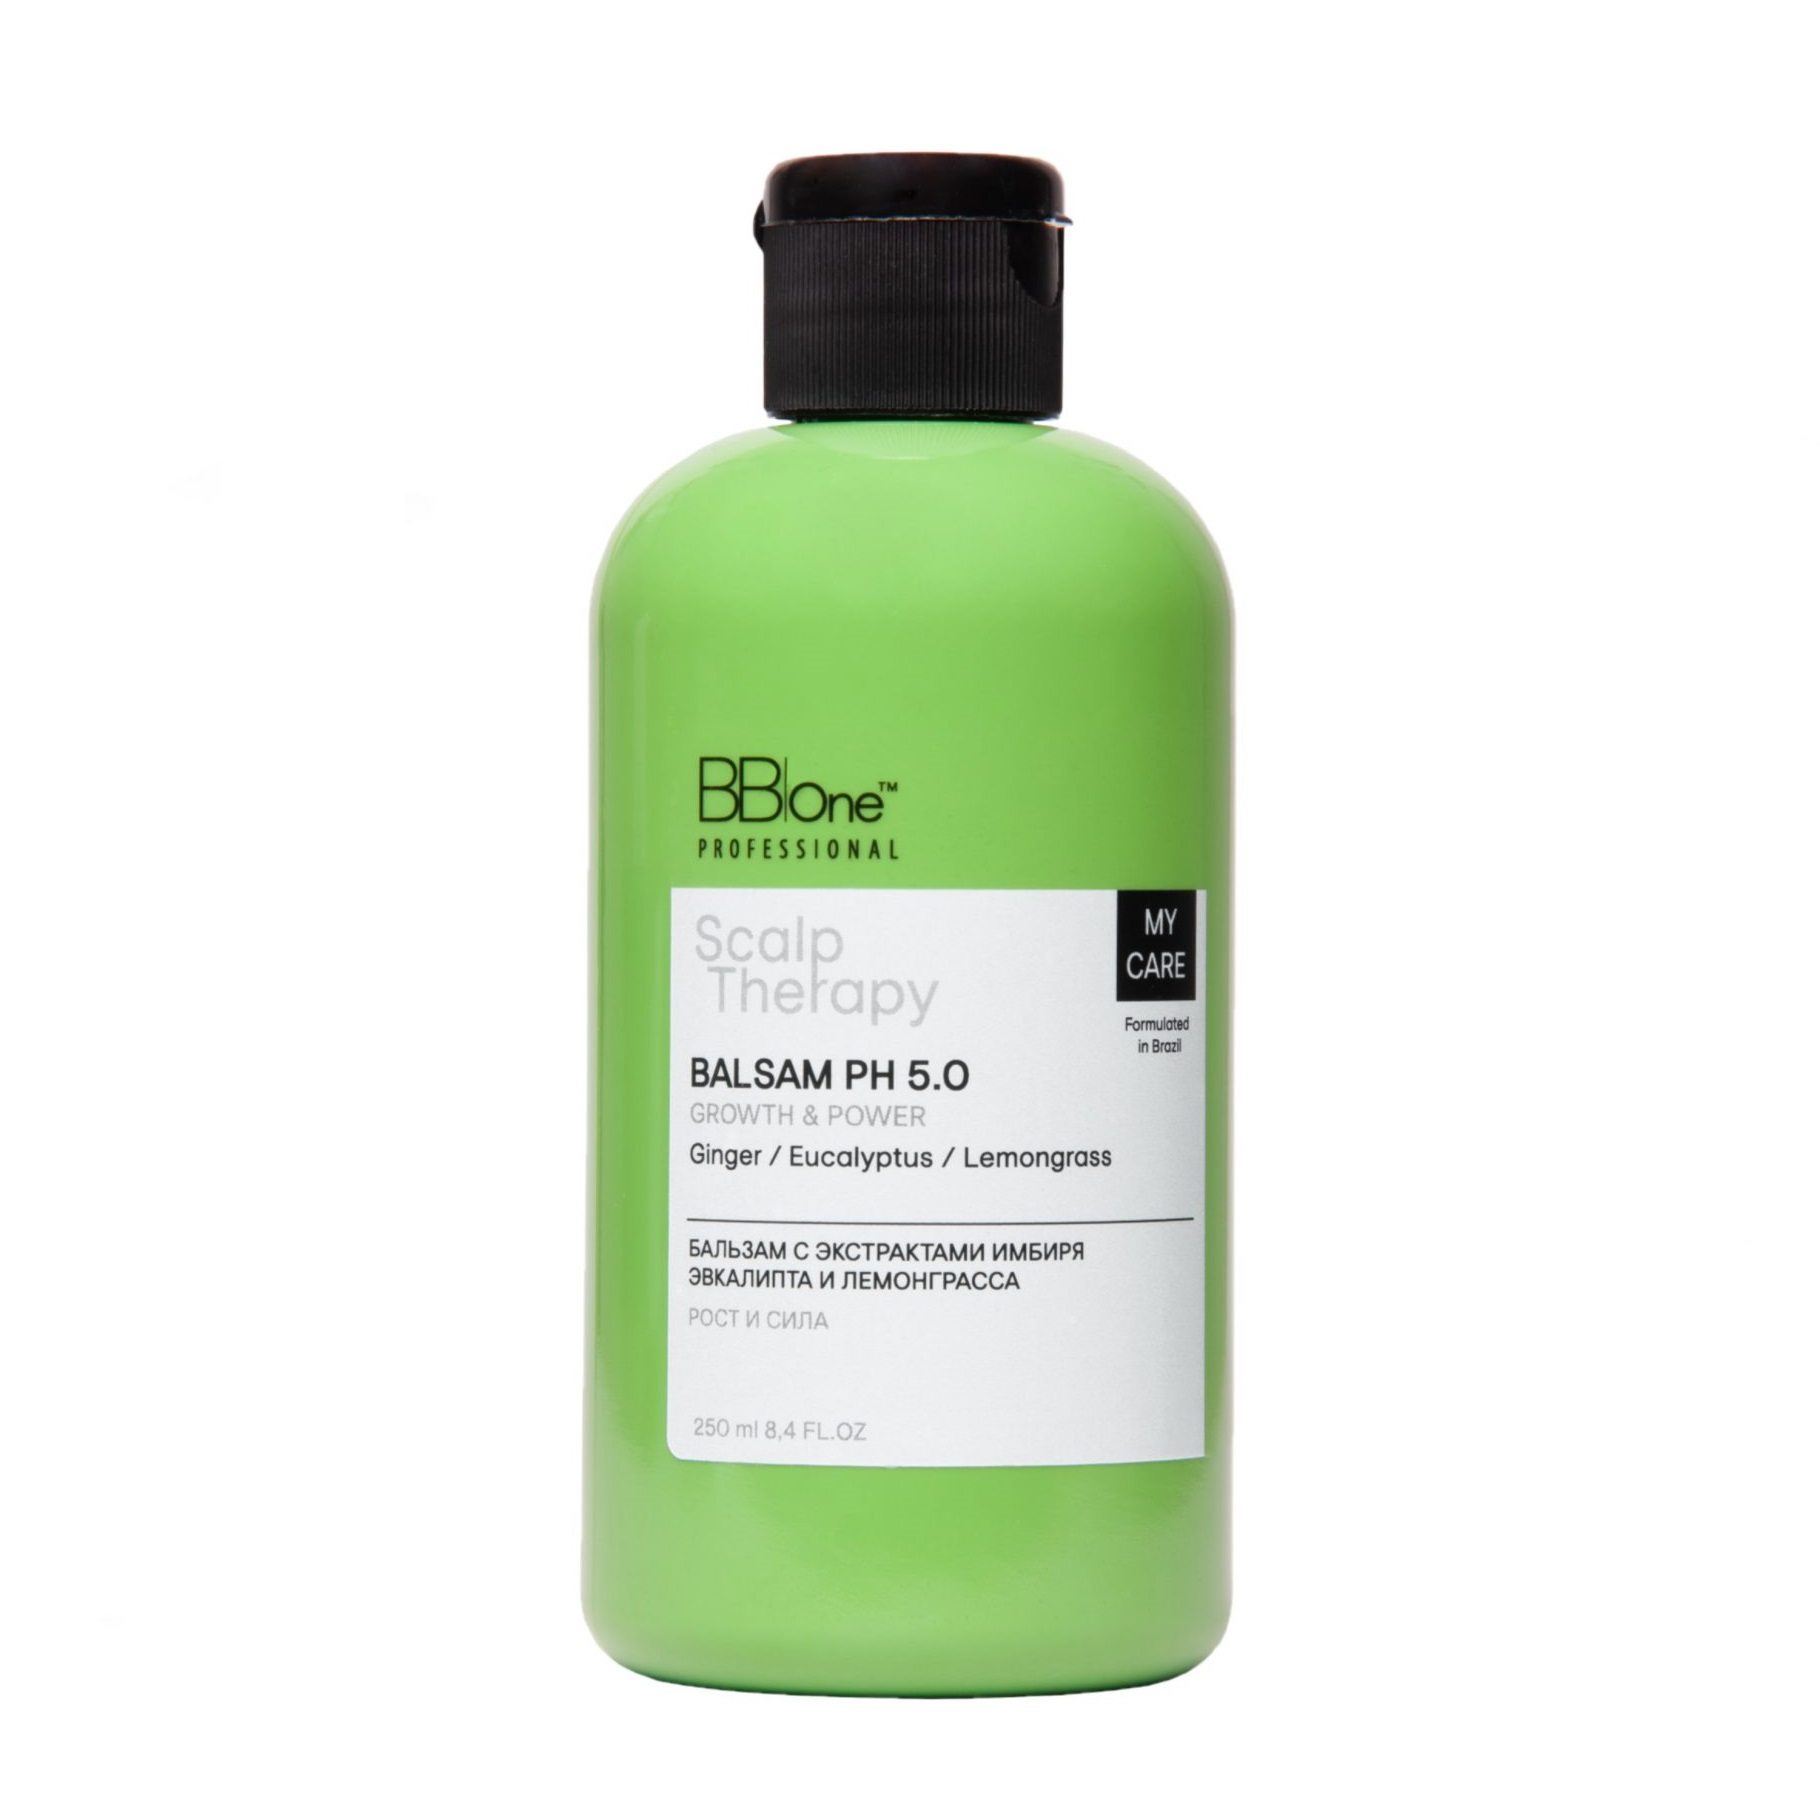 BB ONE, Бальзам для волос Balsam Growth & Power Scalp Therapy, 250 мл.